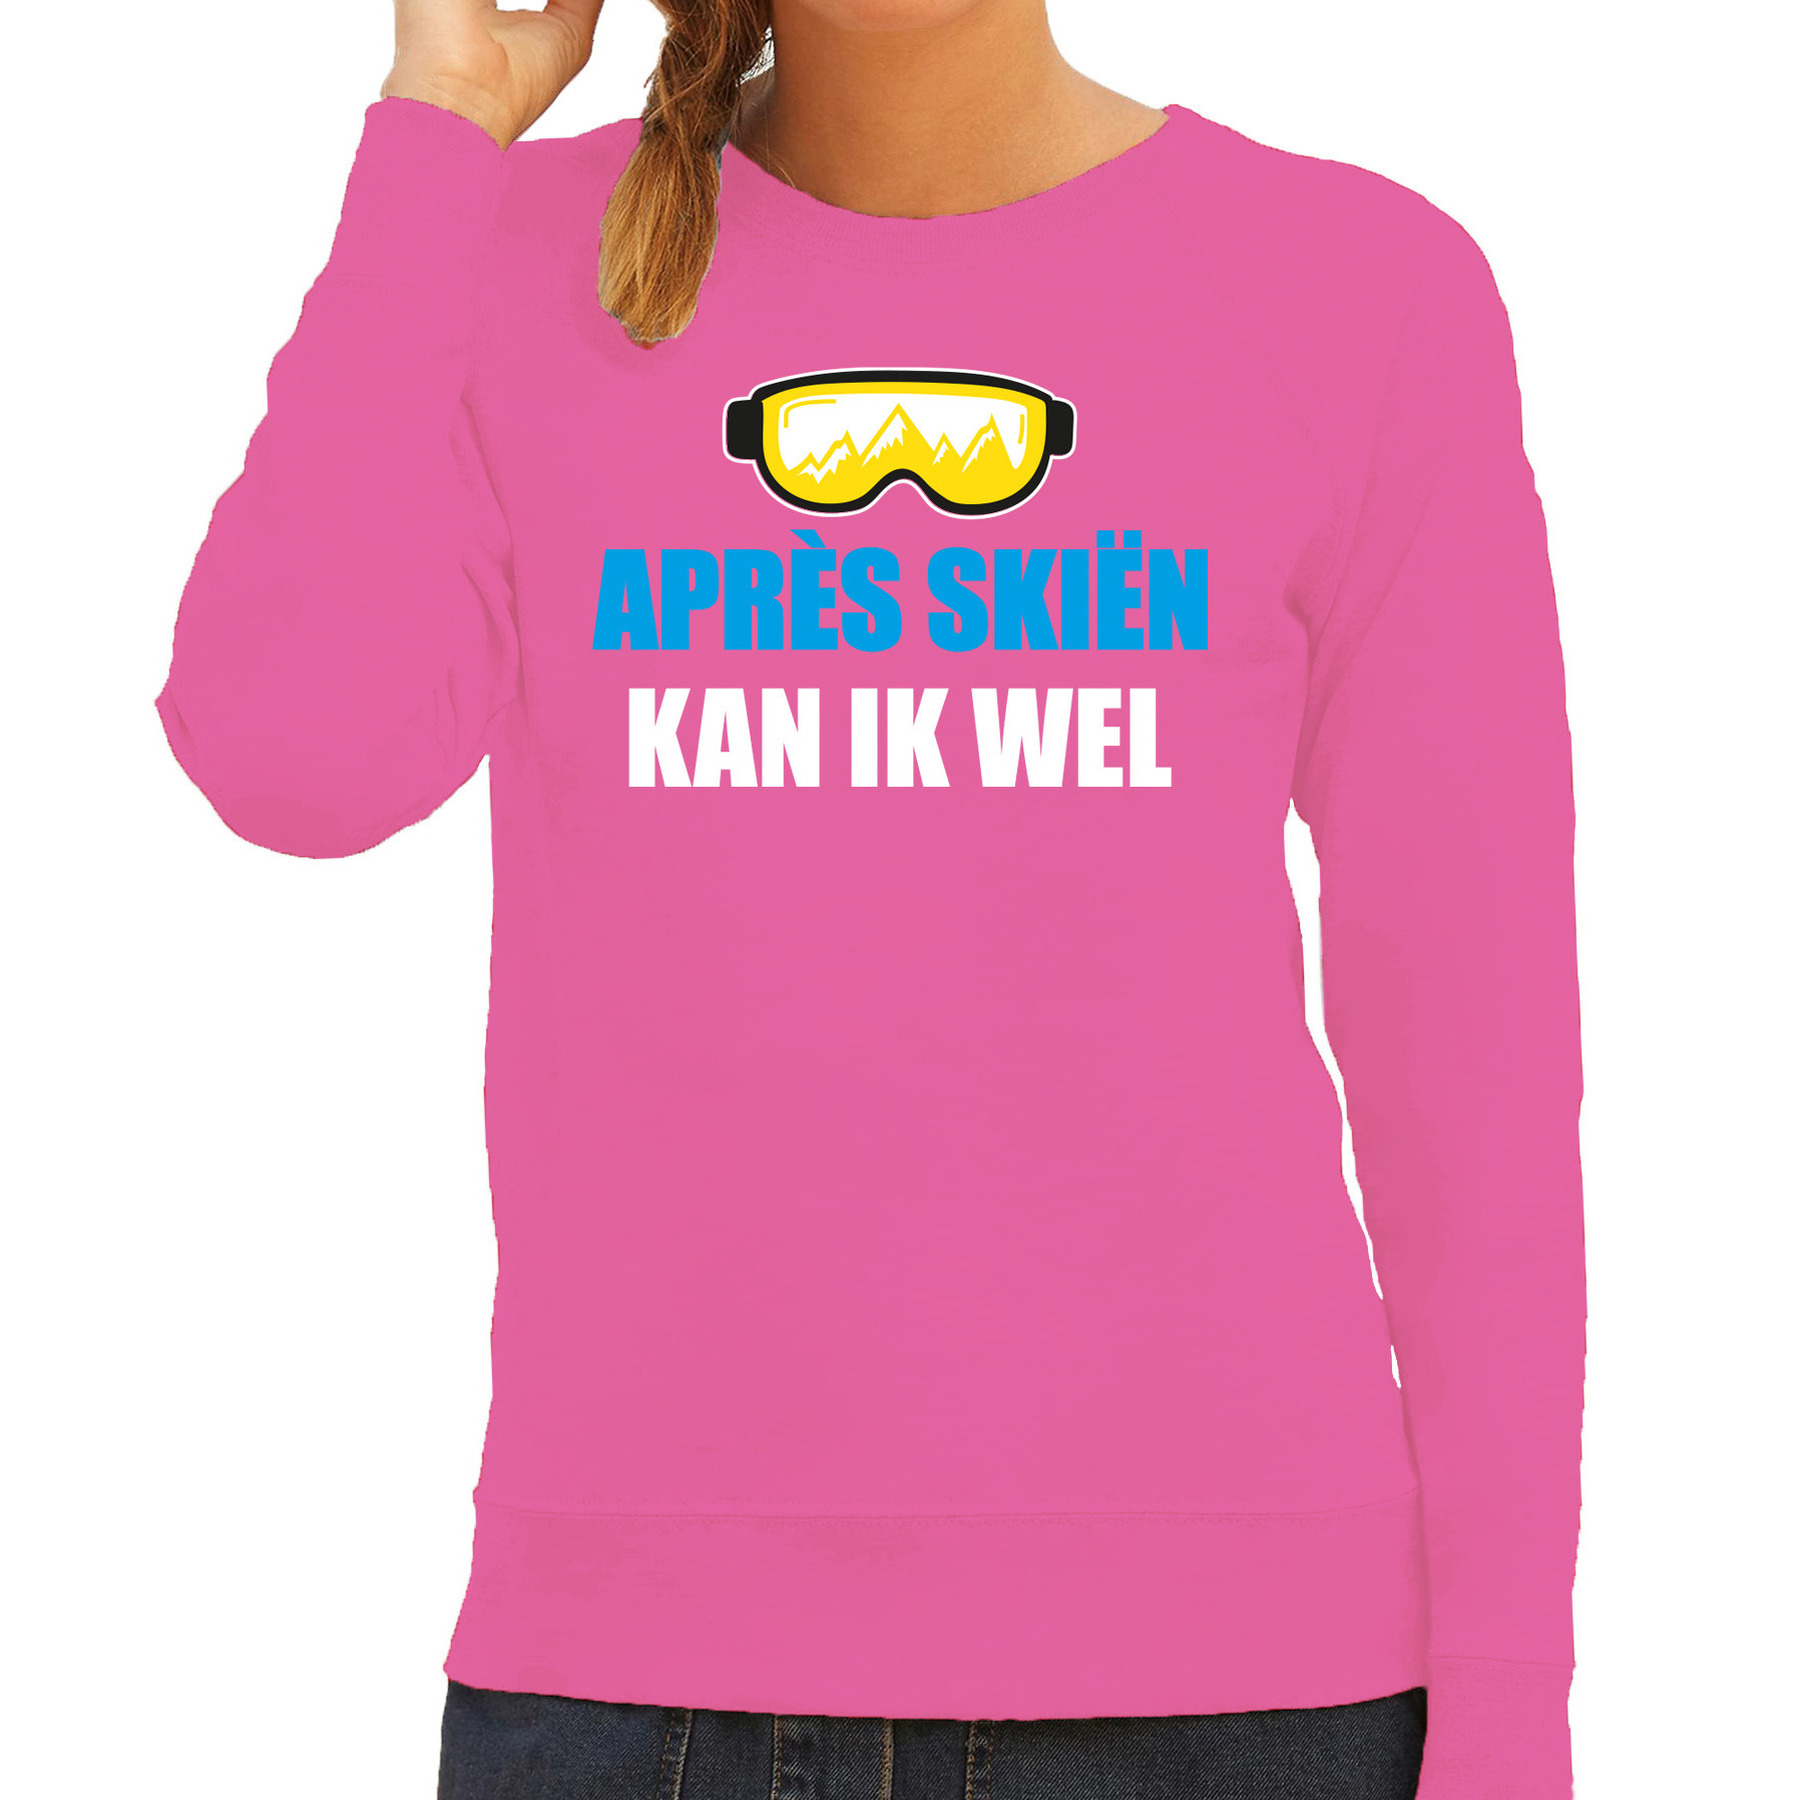 Apres ski sweater-trui voor dames apres skien kan ik wel roze wintersport skien